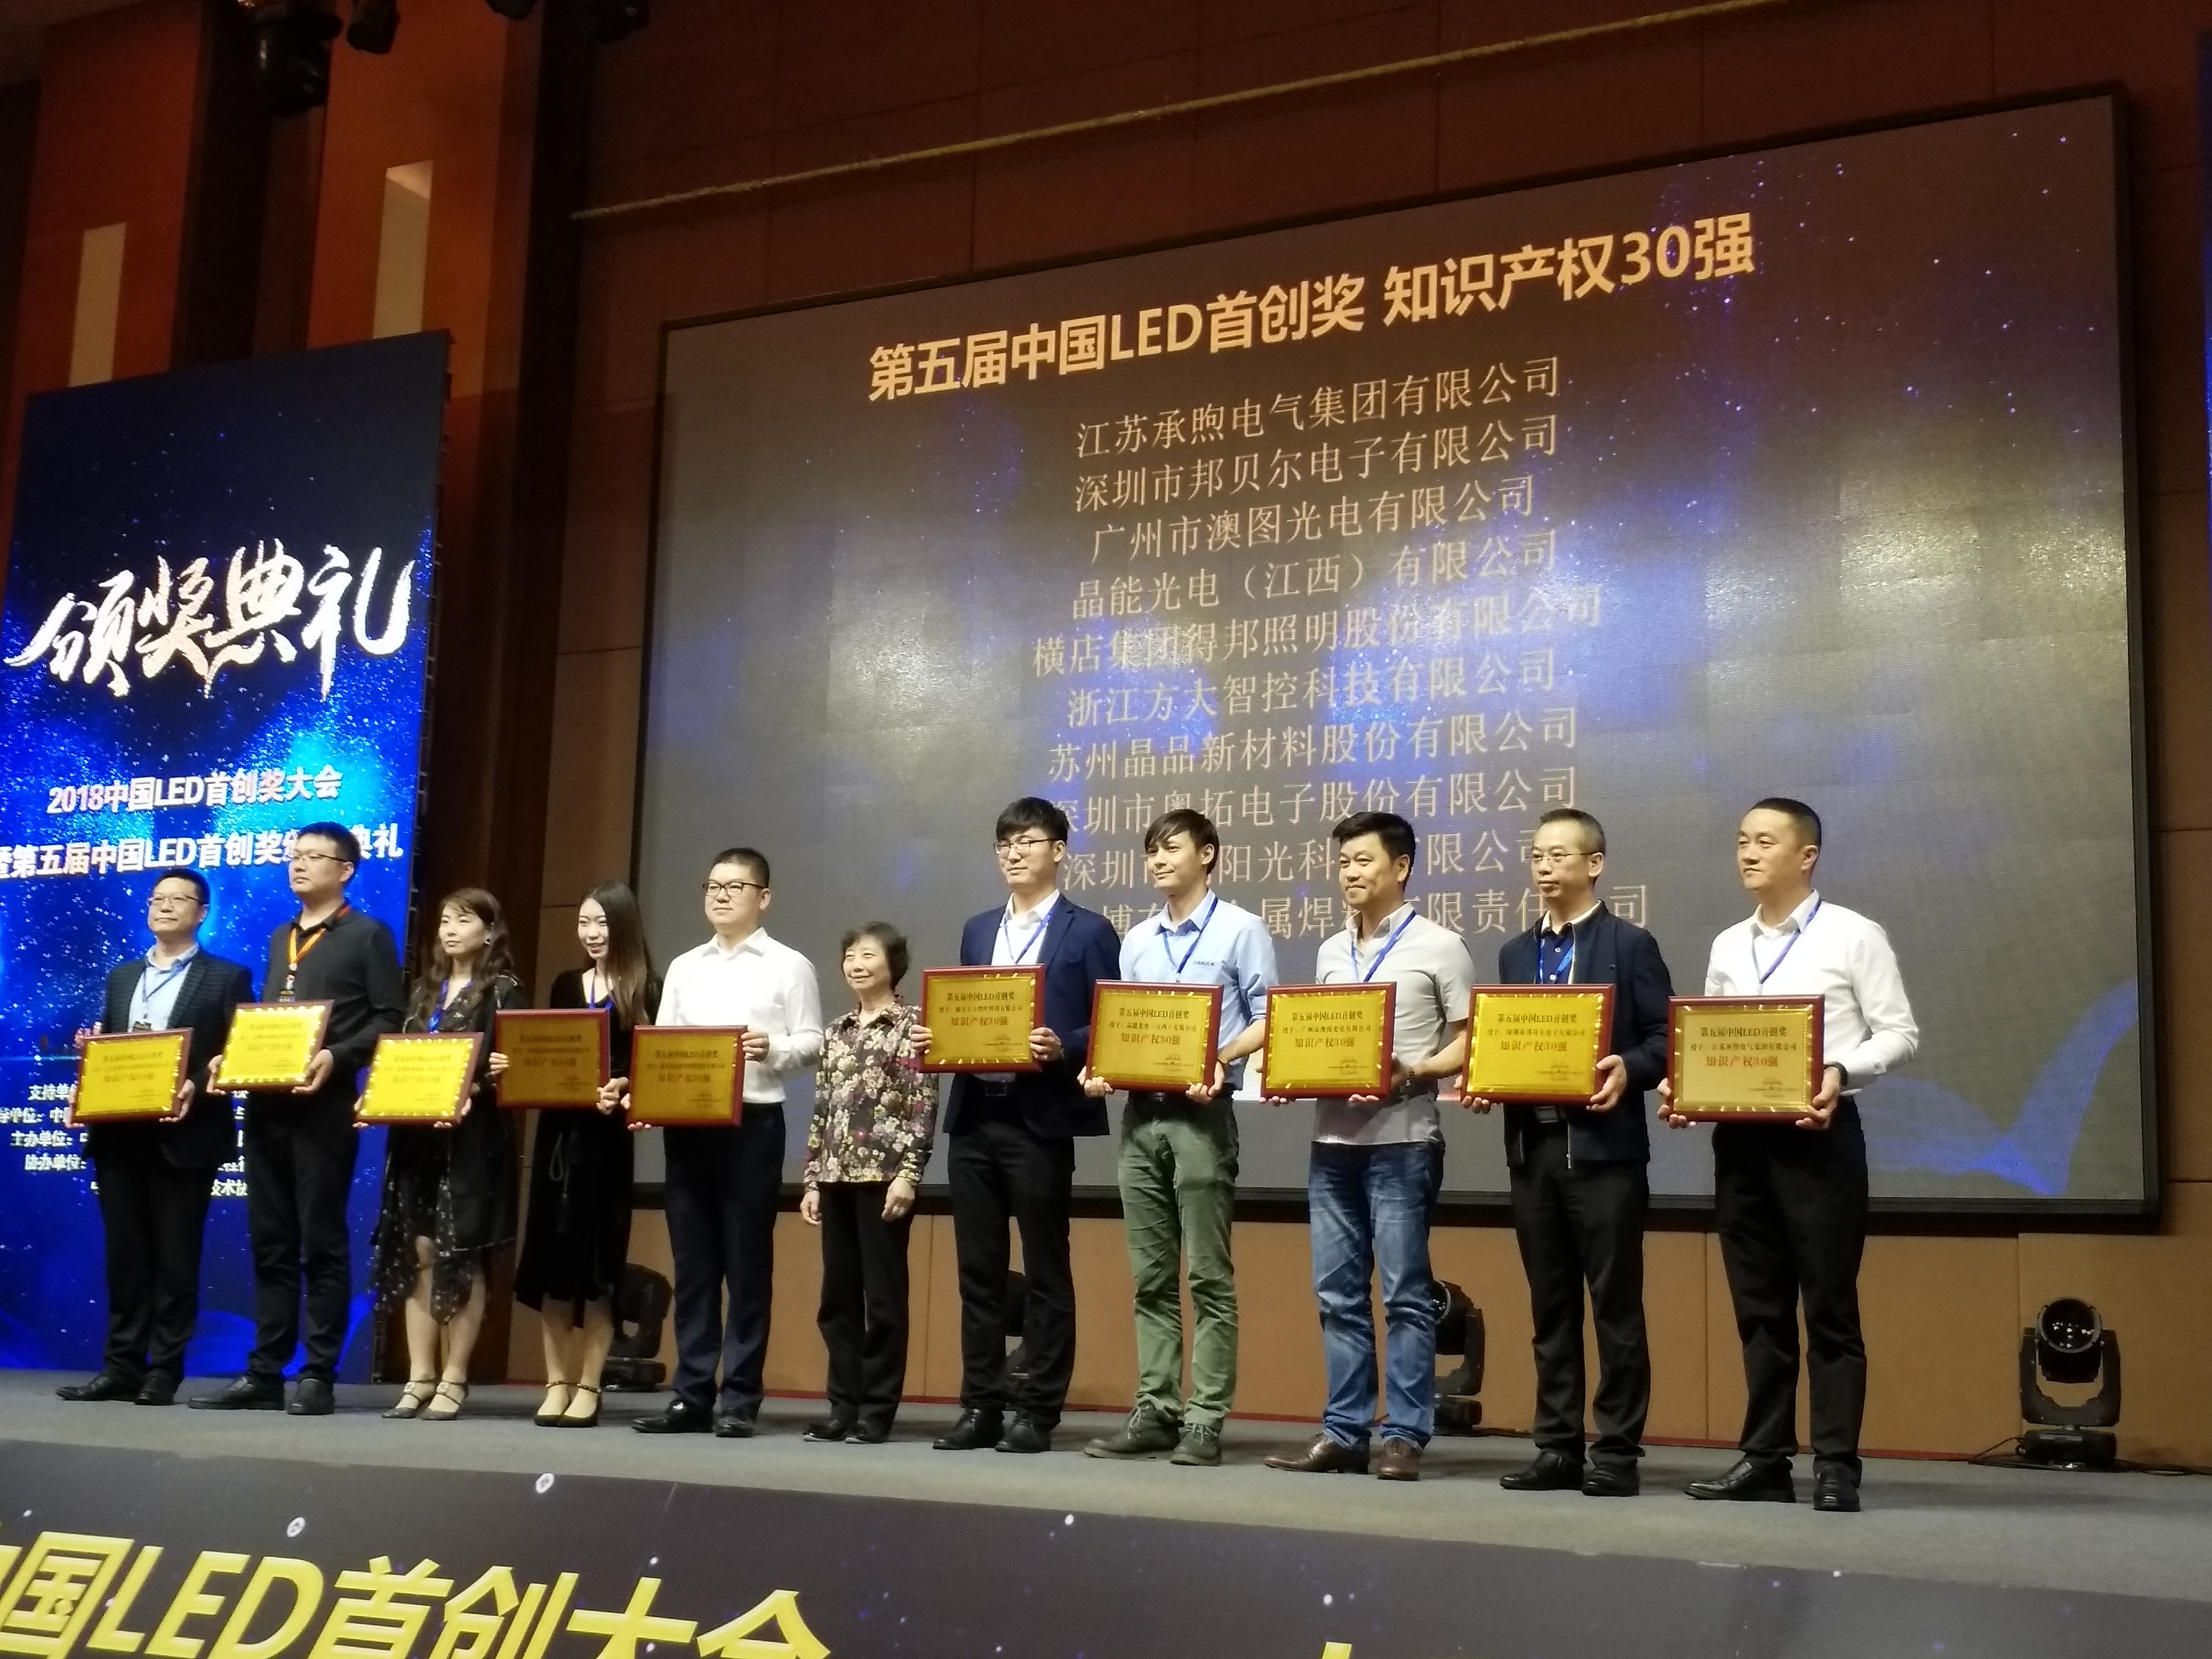 BBE wins “China LED Intellectual Property Top 30” Award